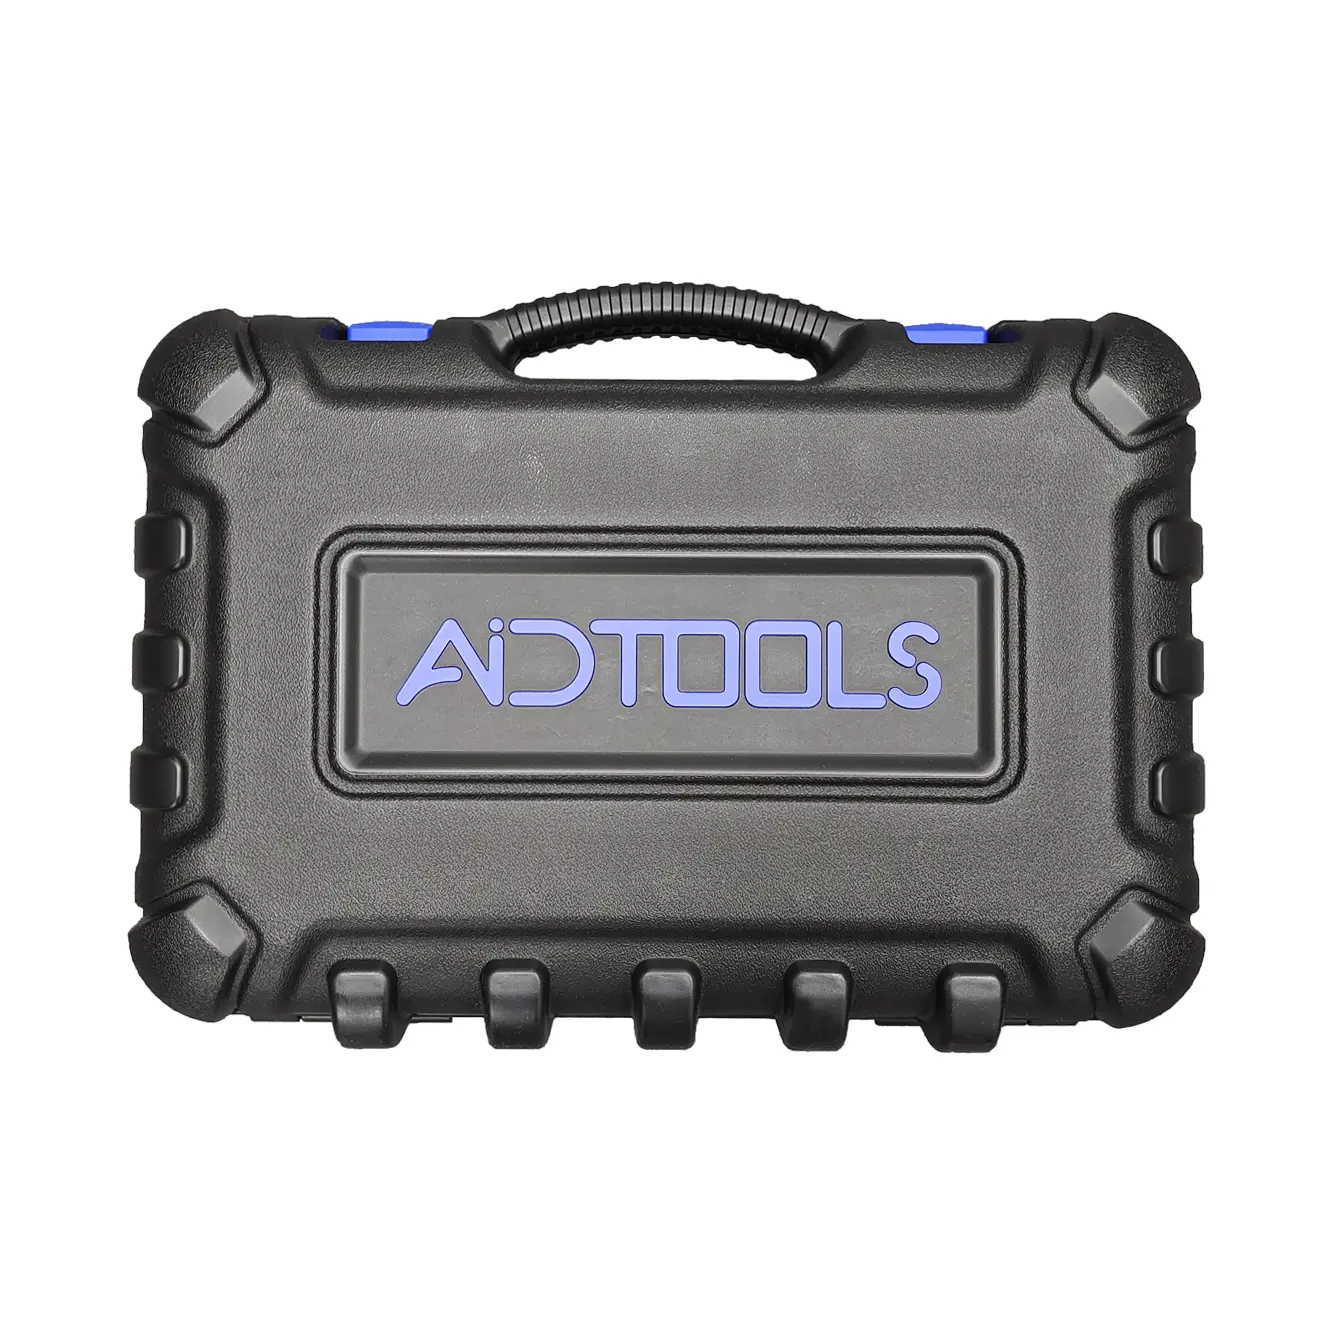 AIDTOOLS Platinum HD Scan Tool For 12V Cars And 24V Trucks Full System Diagnosis Vehicle Diagnostic Tools Code Reader